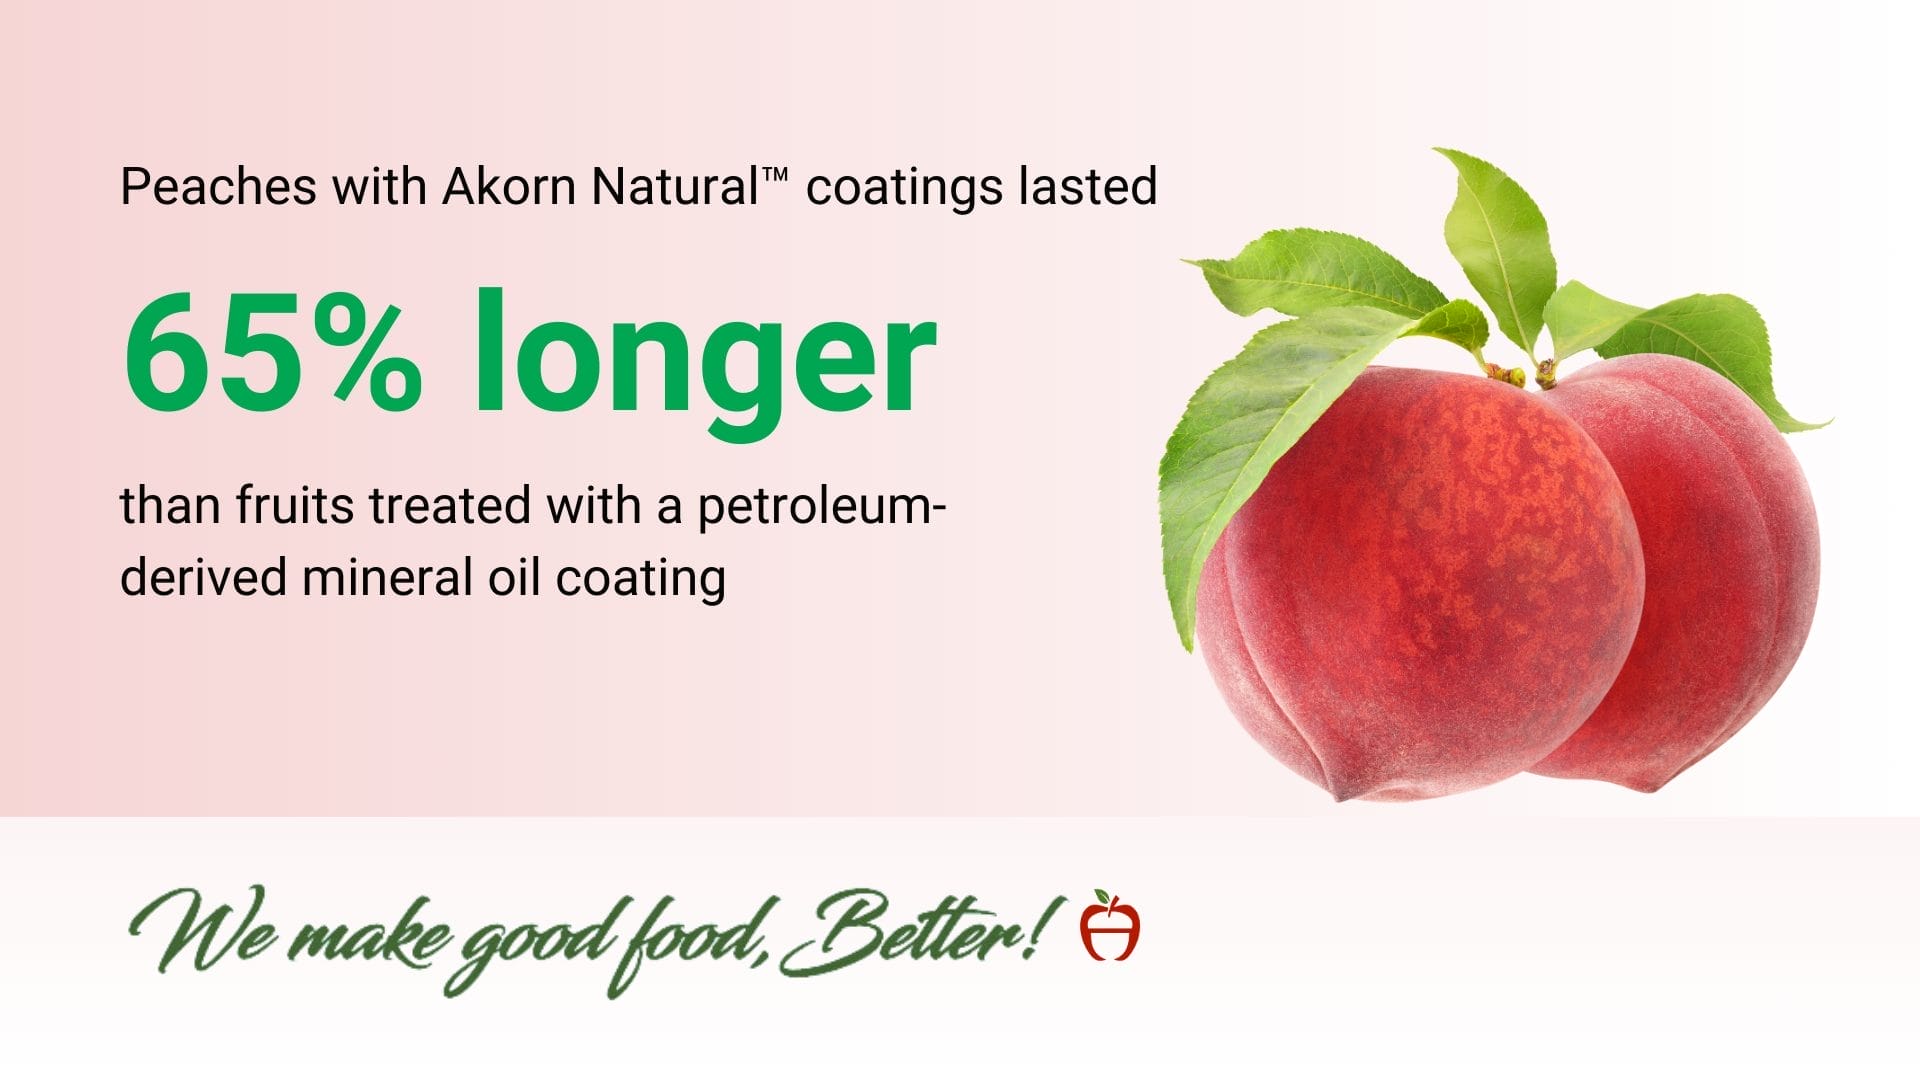 Akorn stone fruits stay fresh 60% longer